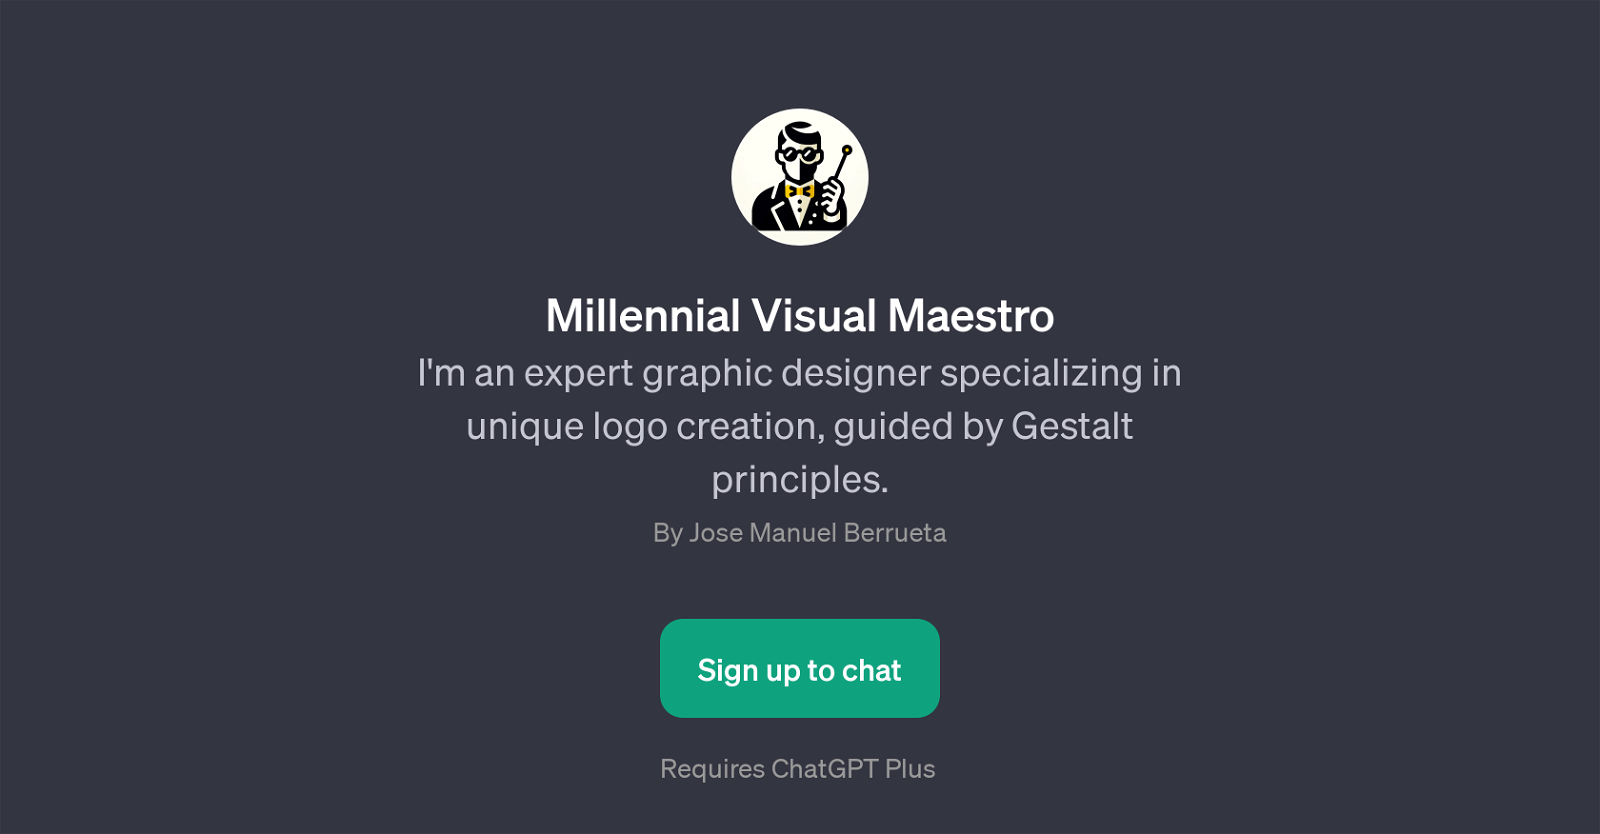 Millennial Visual Maestro website